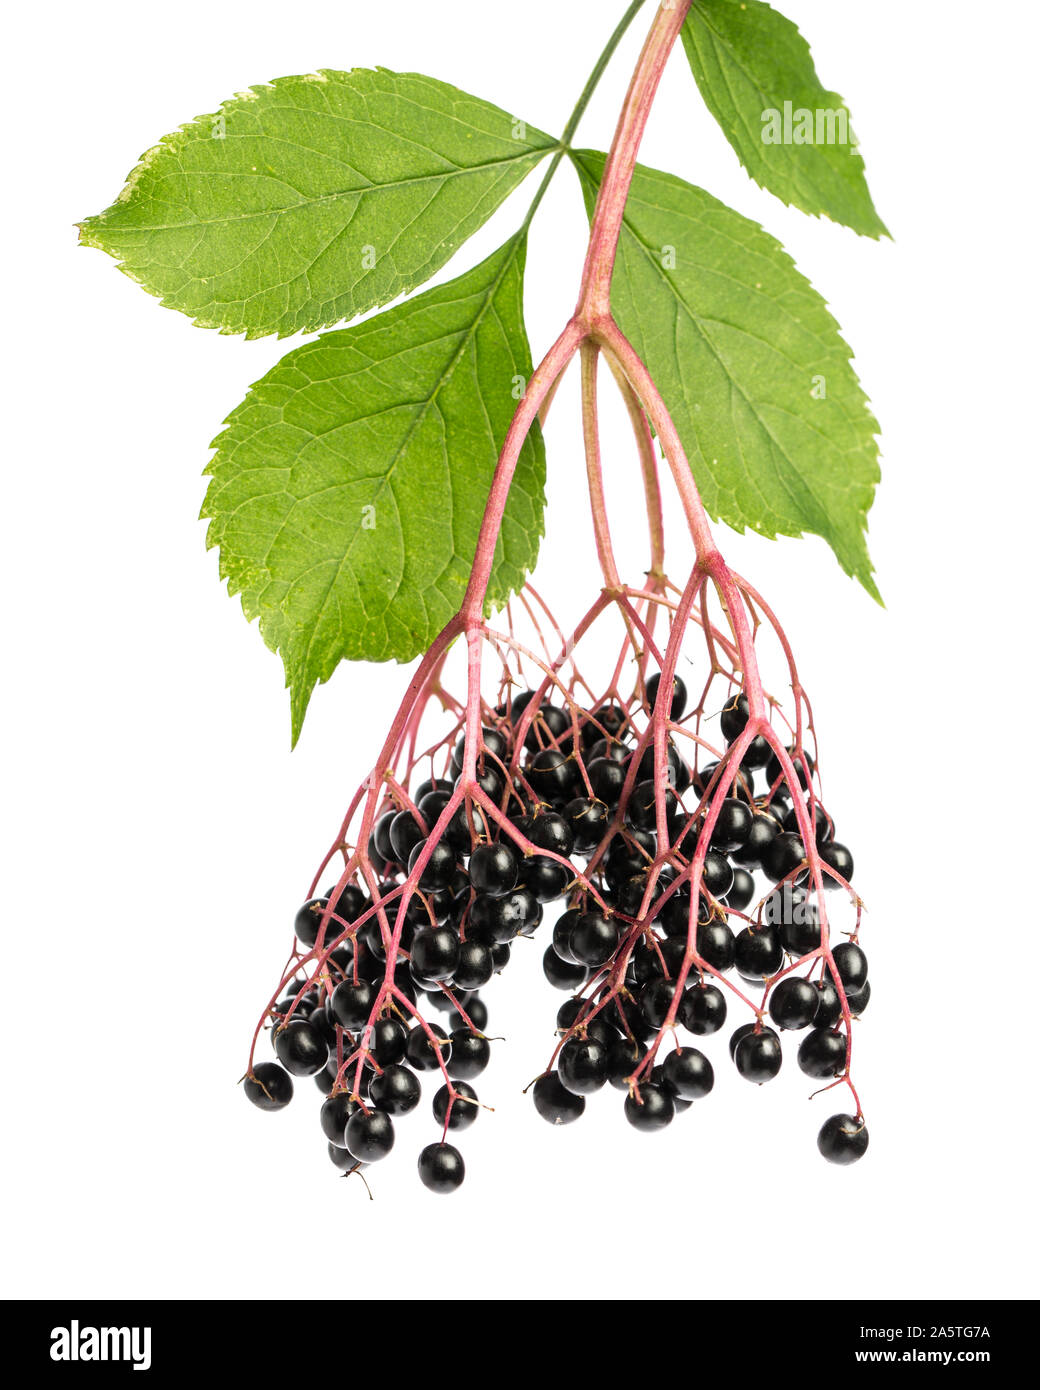 healing plants: Elderberry (sambucus) twig with berries on white background Stock Photo